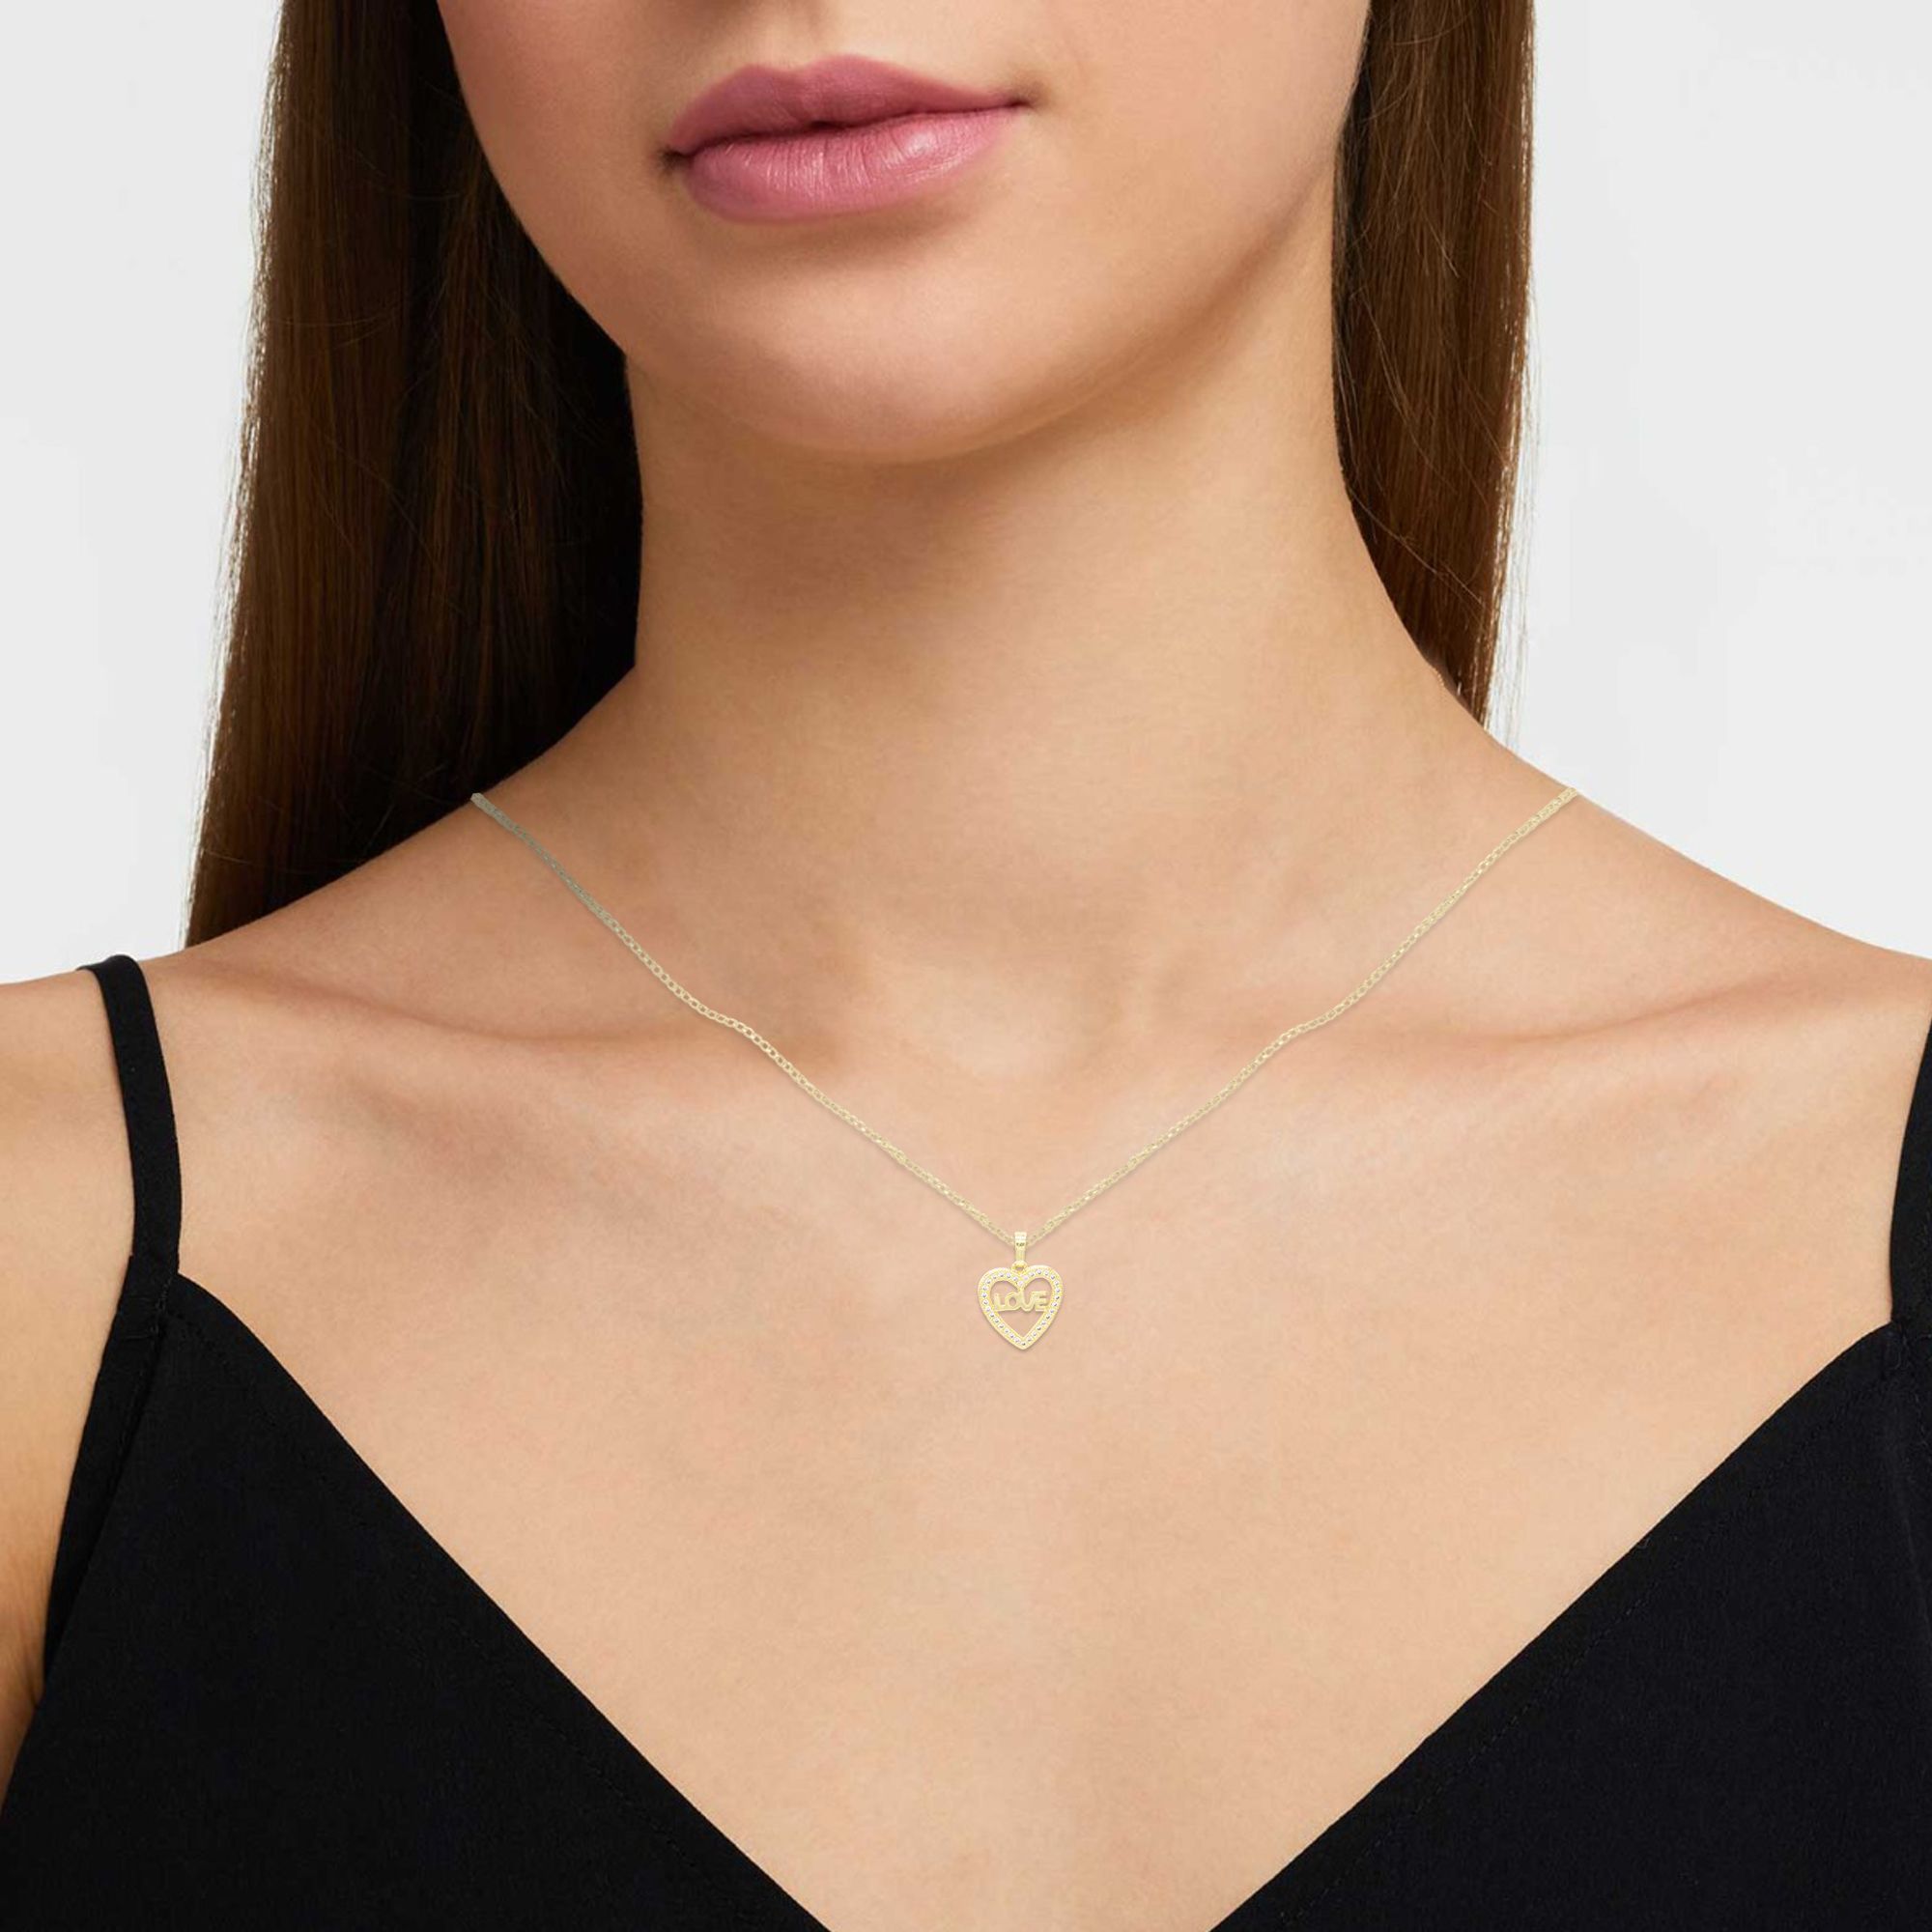 Cubic Zirconia 14K Gold Filled Heart Love Pendant Necklace Set